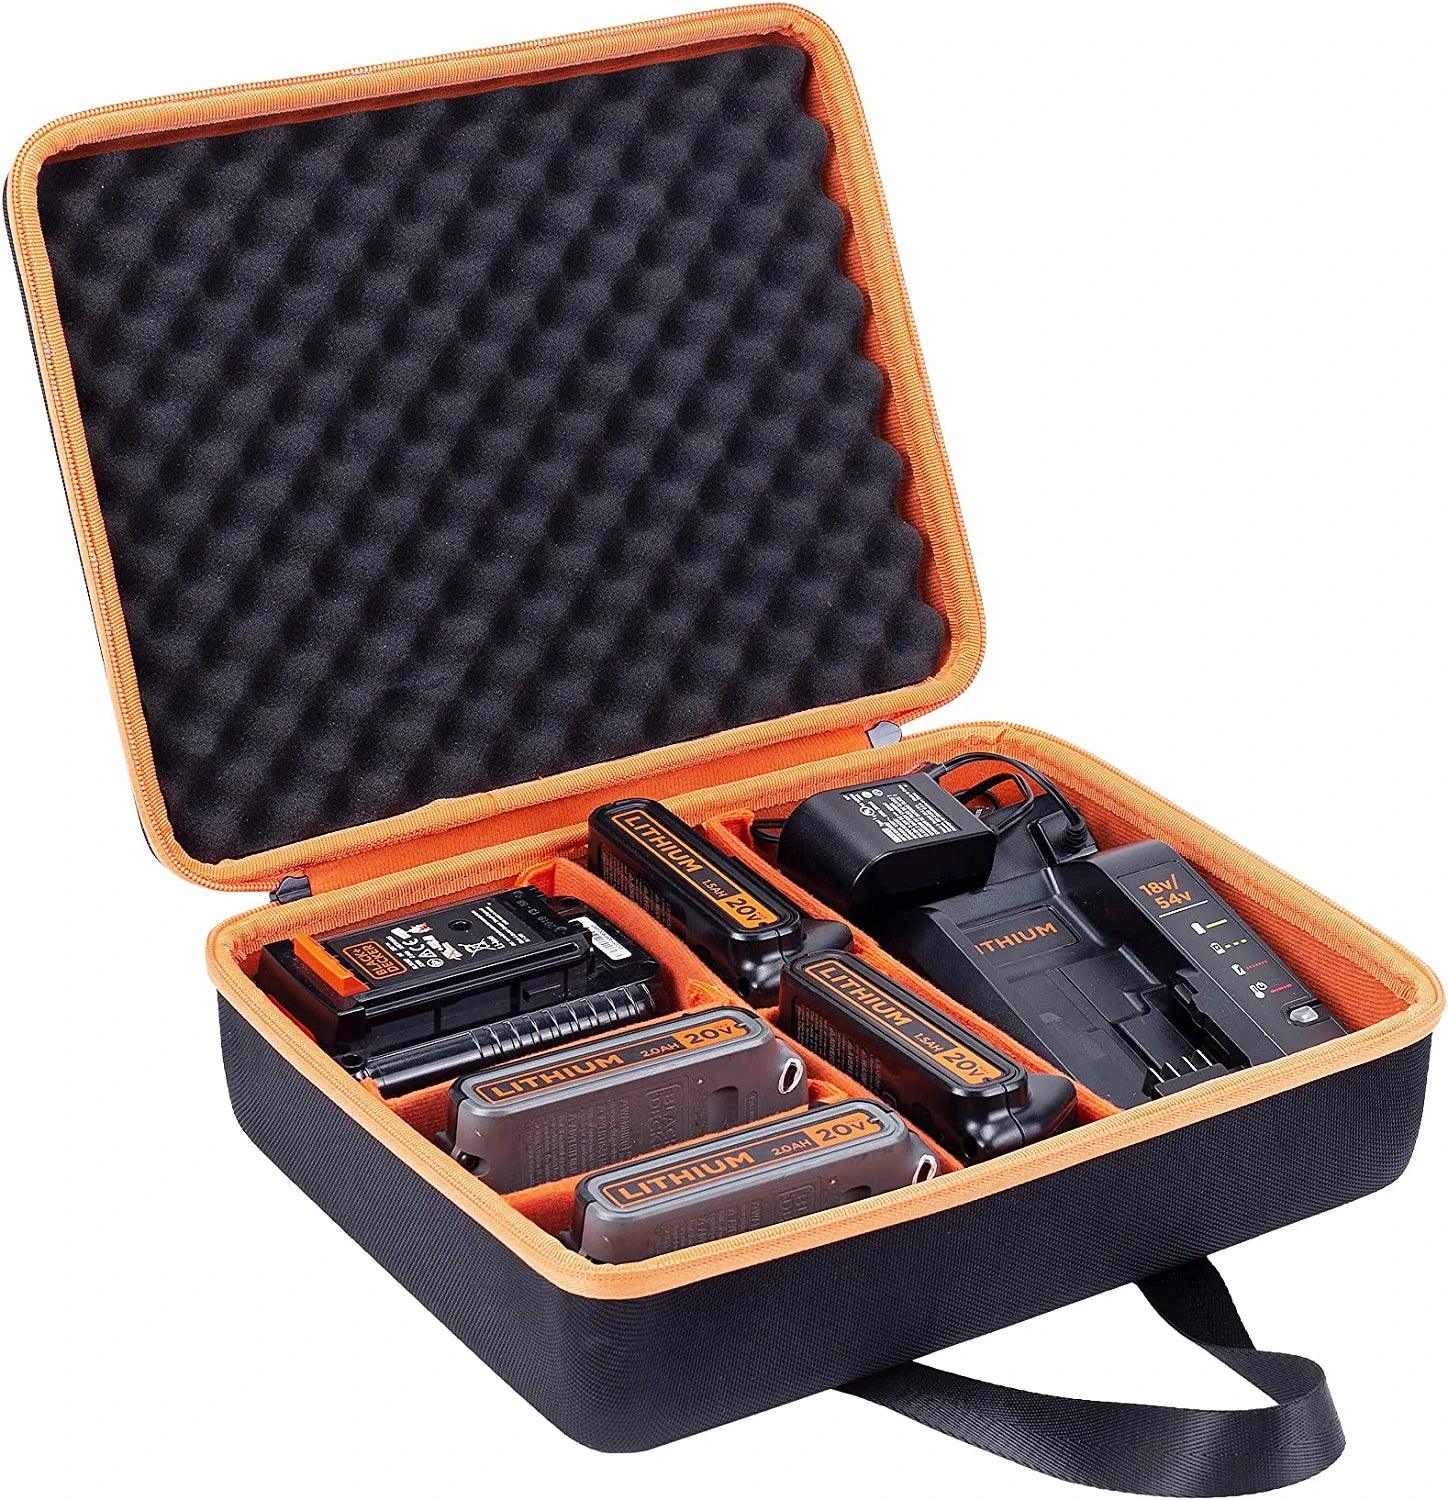 Vanon-Batteries-Store for Black and Decker 40V Max 4.0Ah Li-ion Battery Replacement |LBXR36 Lbx2040